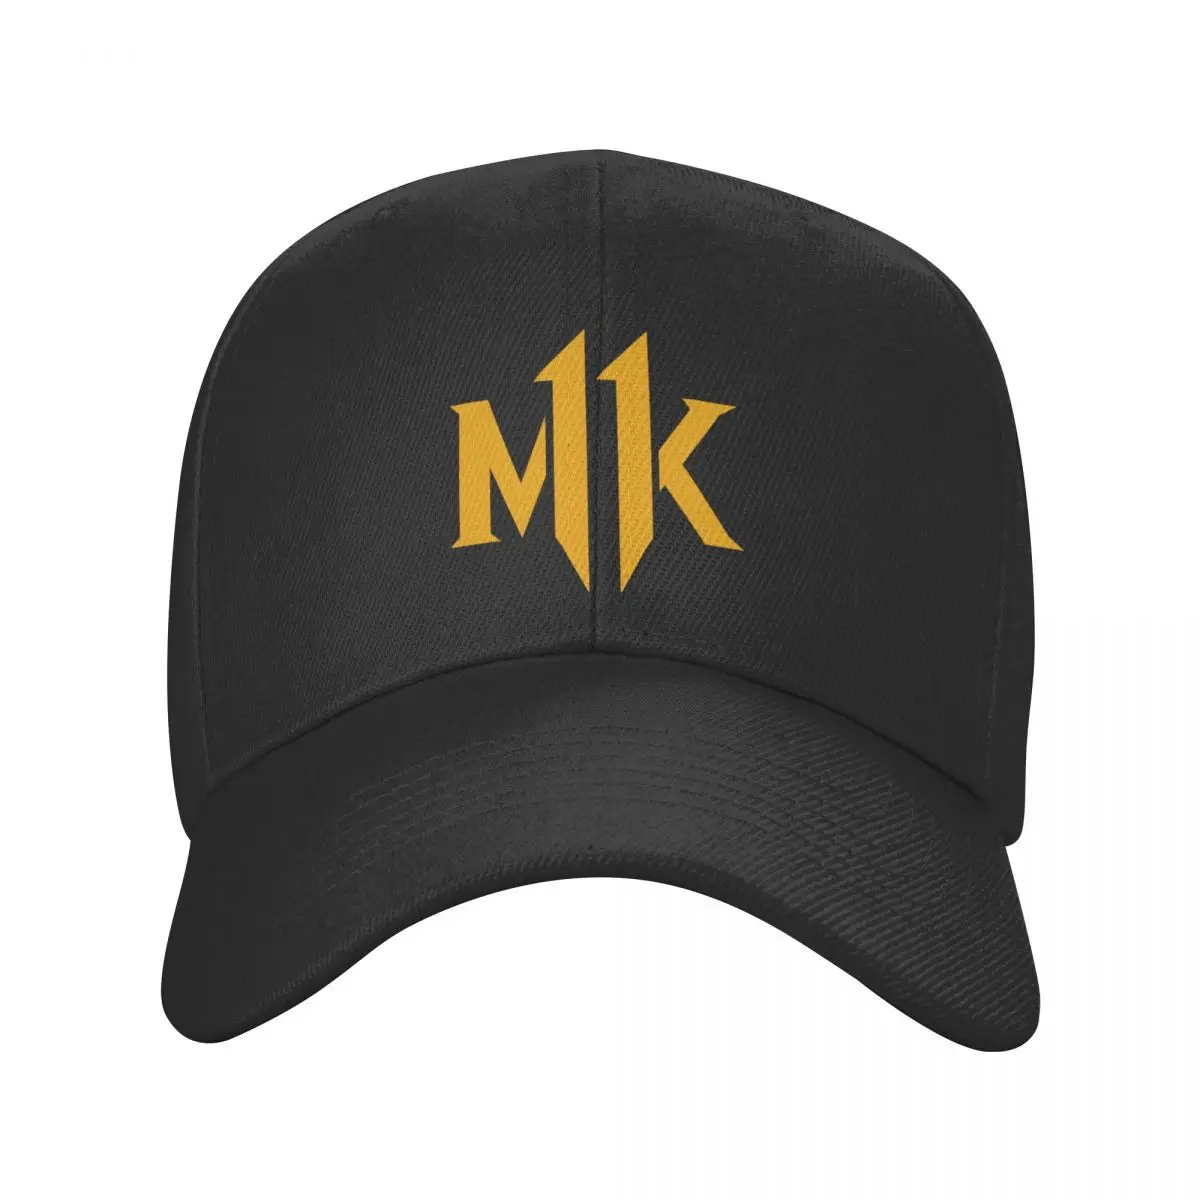 

New Fashion Mortal Kombat MK Baseball Cap Adjustable Unisex Fighting Game Sub Zero Scorpion Dad Hat Summer Snapback Caps